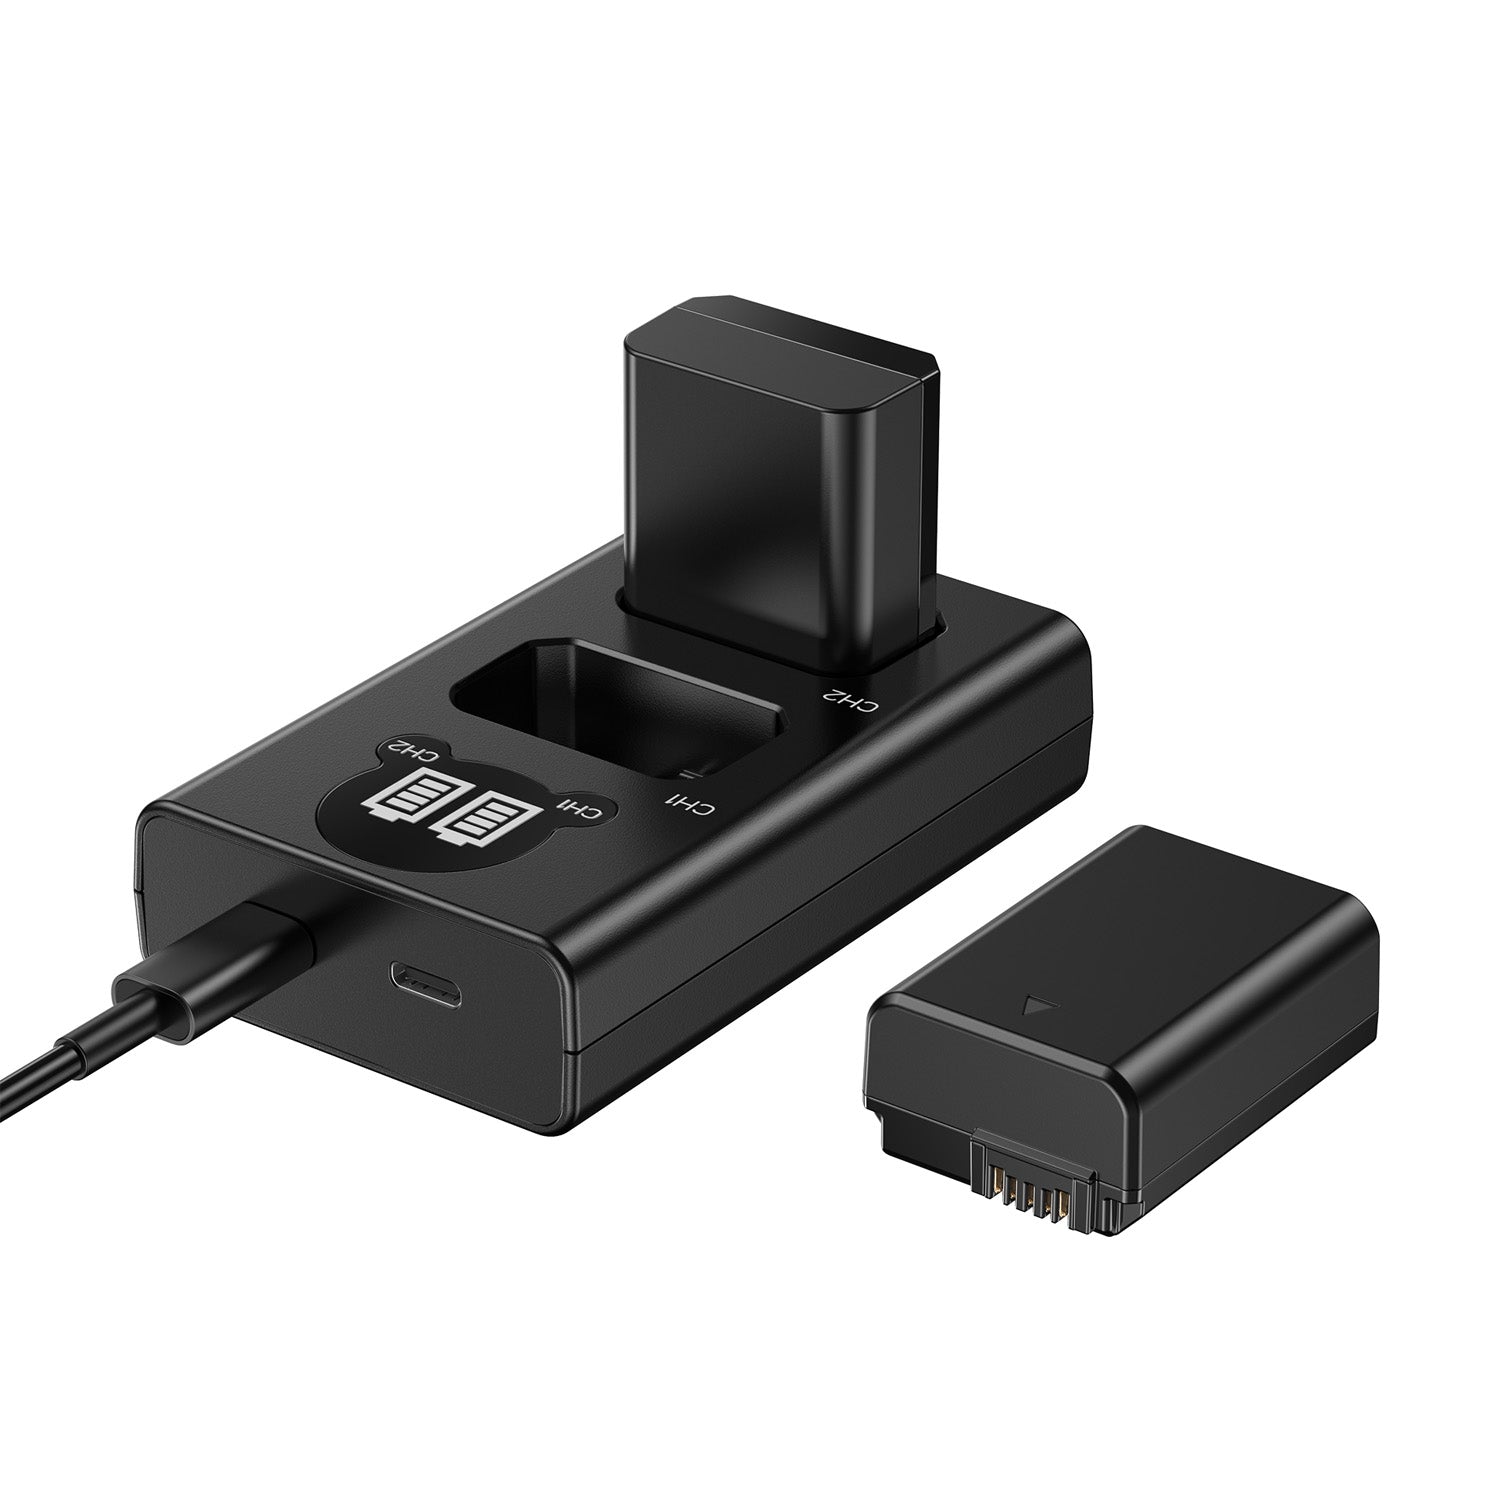 NP-FW50 Camera Battery (2-Pack,1300mAh) and Rapid Dual Charger  manual- ENEGON